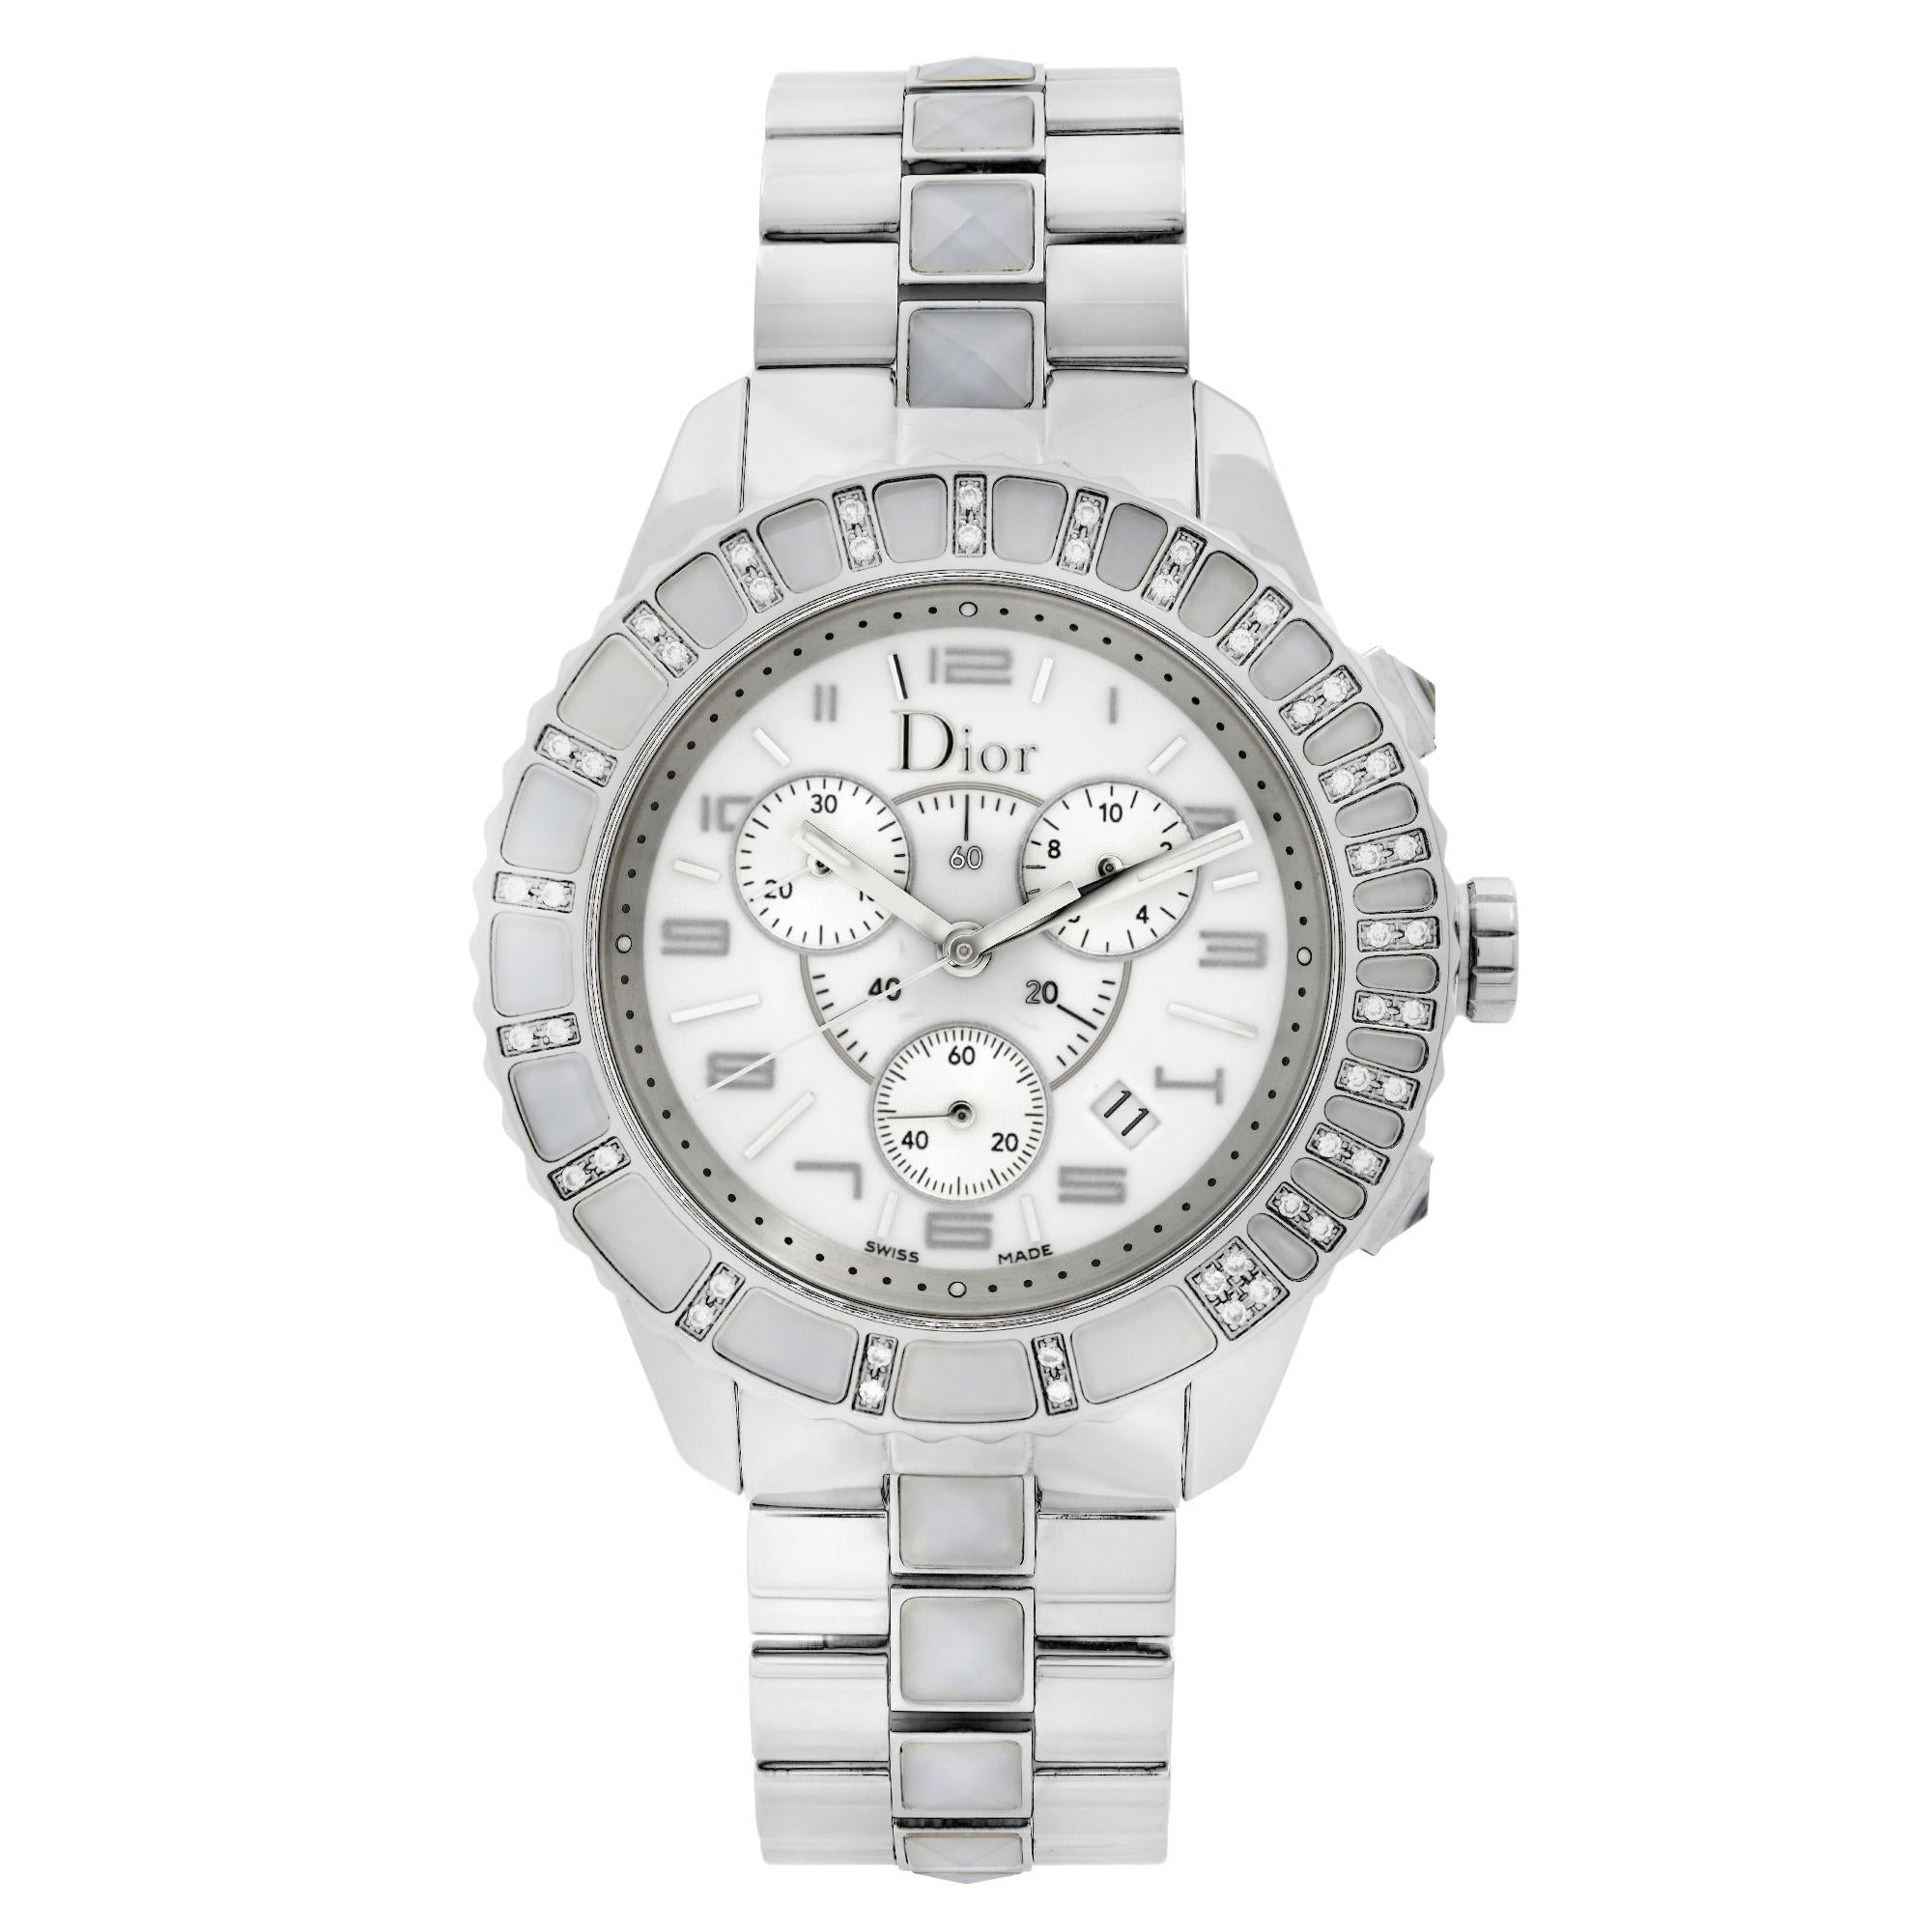 Dior Christal Stainless Steel Diamond White Dial Quartz Watch CD114311M001